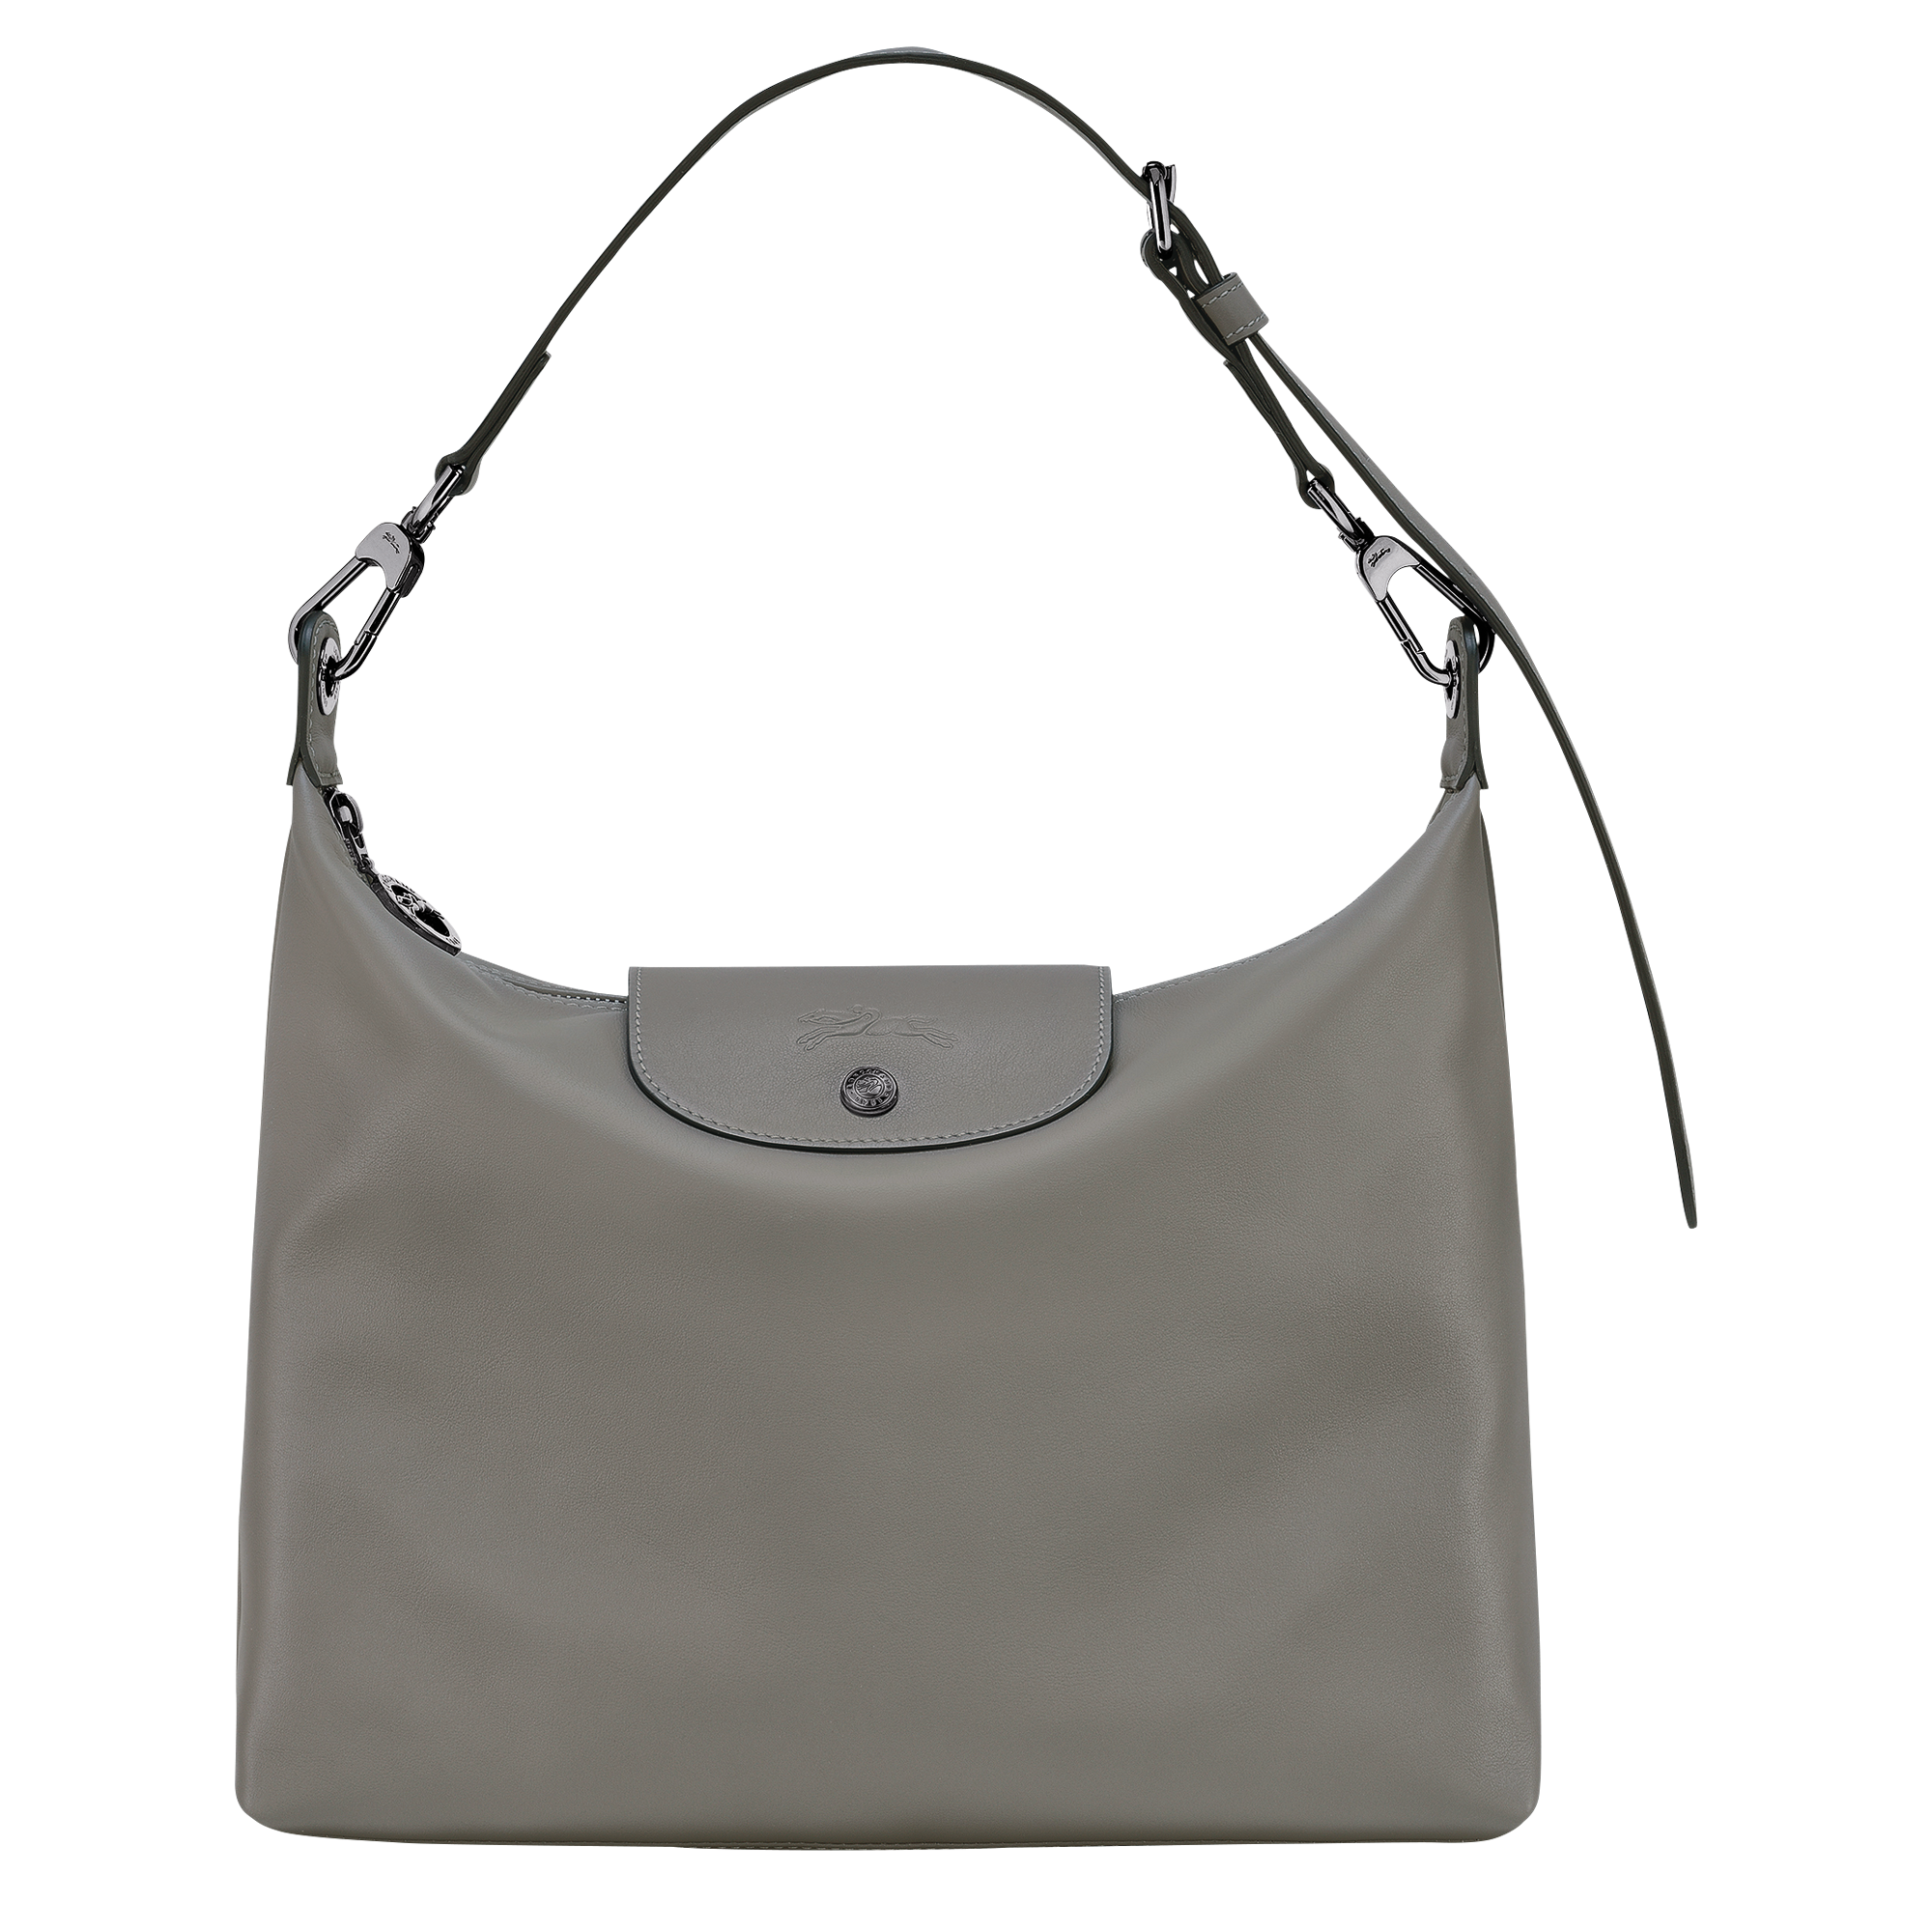 Longchamp bag | Longchamp bag, Longchamp bag outfit, Black longchamp bag